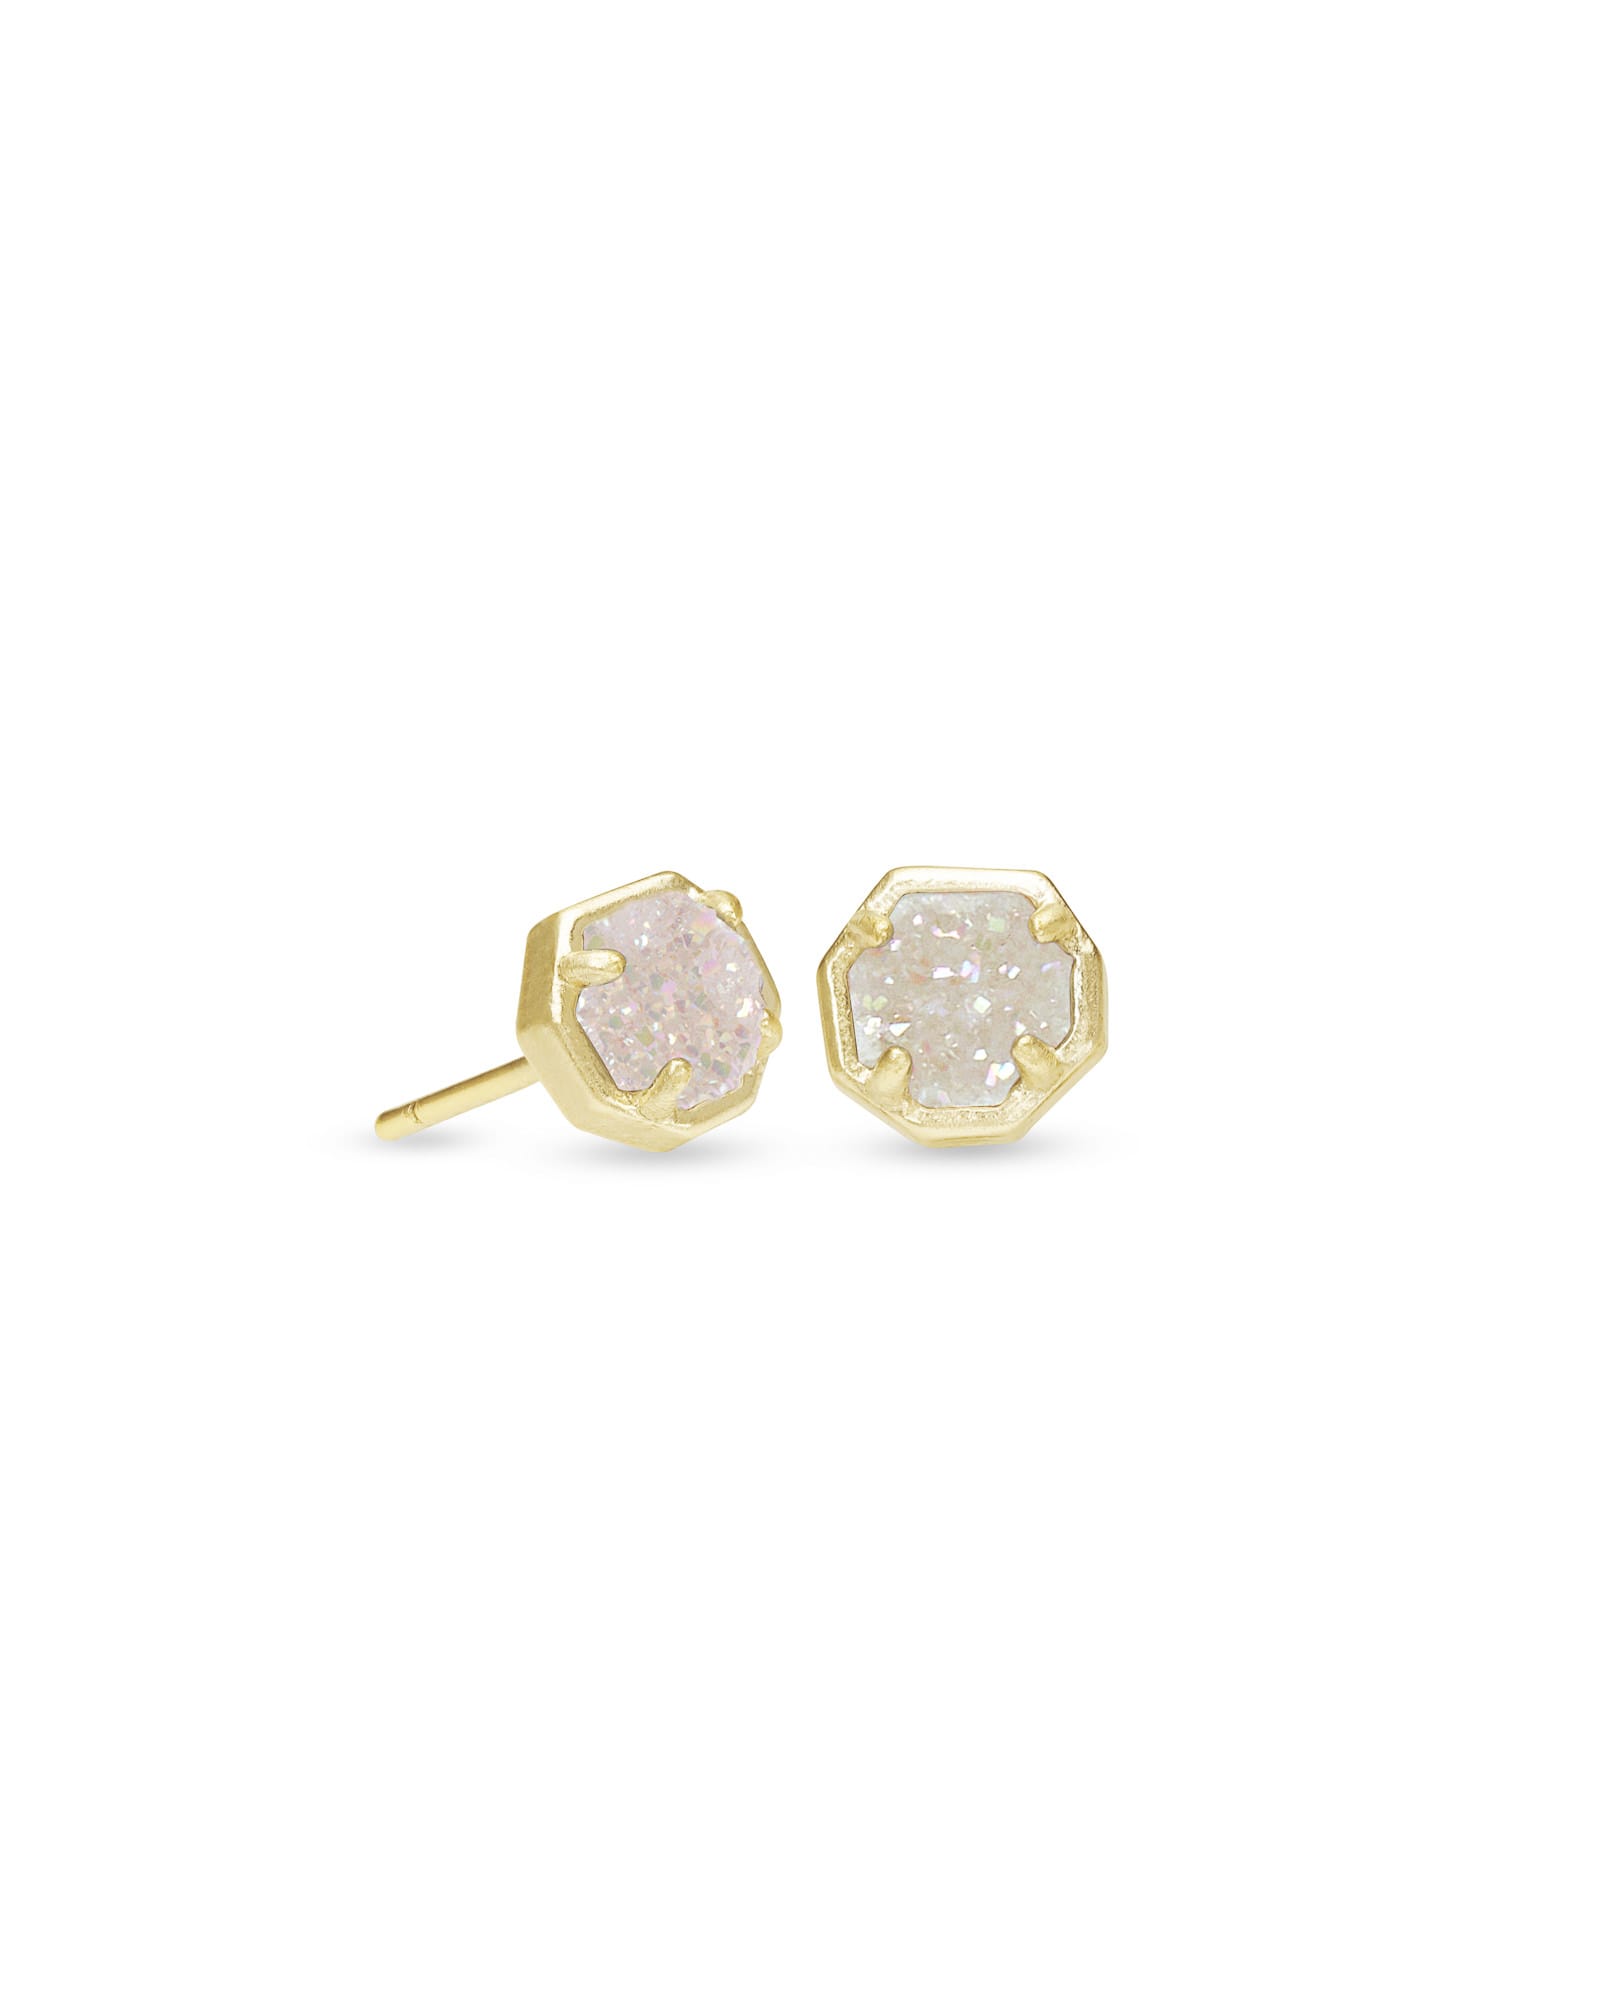 Nola Gold Stud Earrings in Iridescent Drusy | Kendra Scott